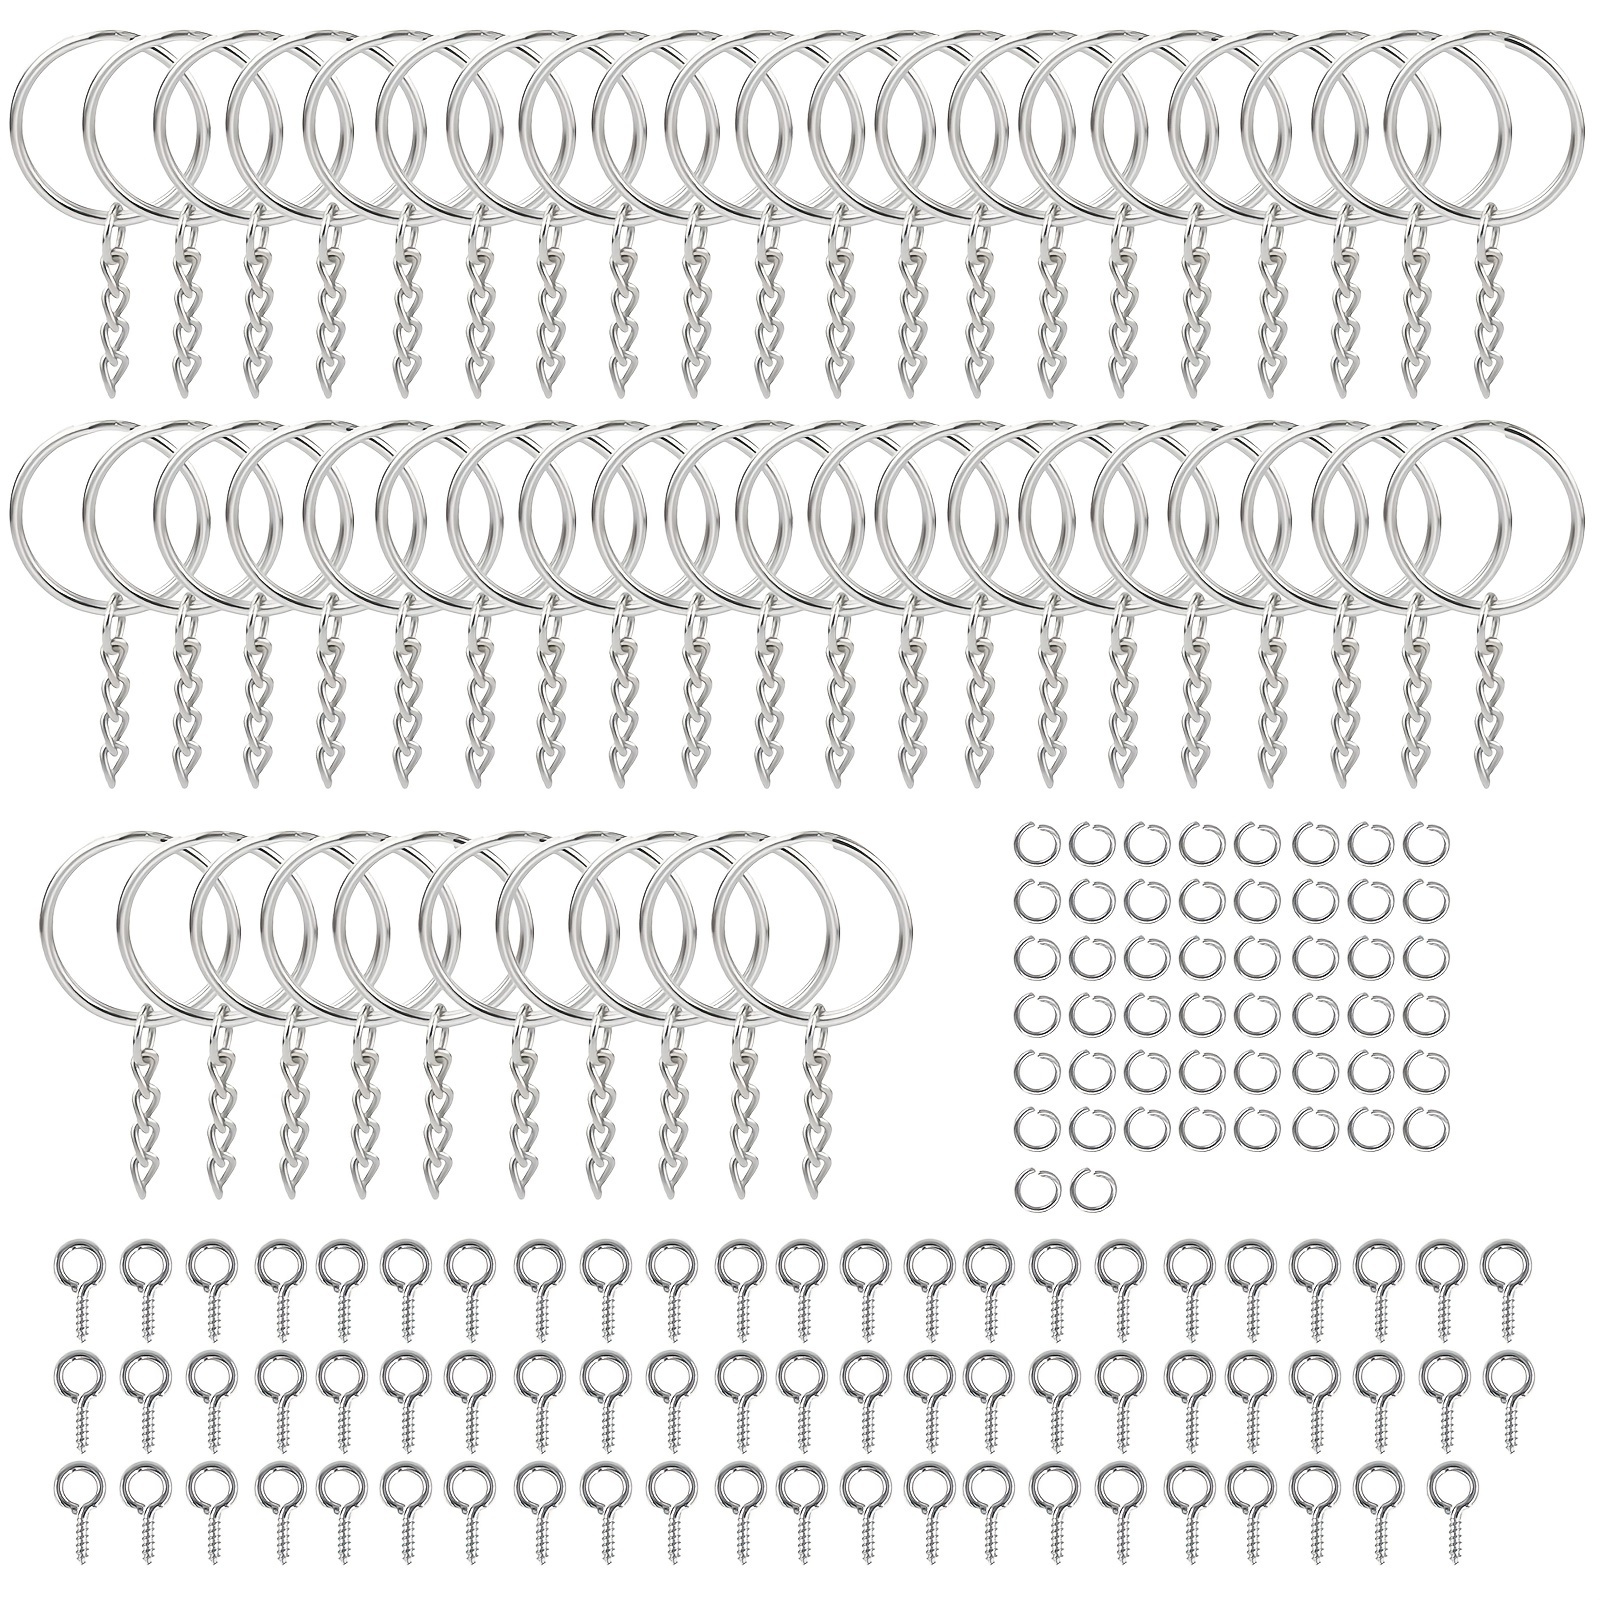 

150pcs Split Keyrings Metal Key Chain Double-loop Key Rings Silver Keyring Blanks Key Ring With Link Chain Open Jump Ring Screw Eye Pins Bulk Diy Art Craft For Jewelry Making Keys Bags Decor, 25mm